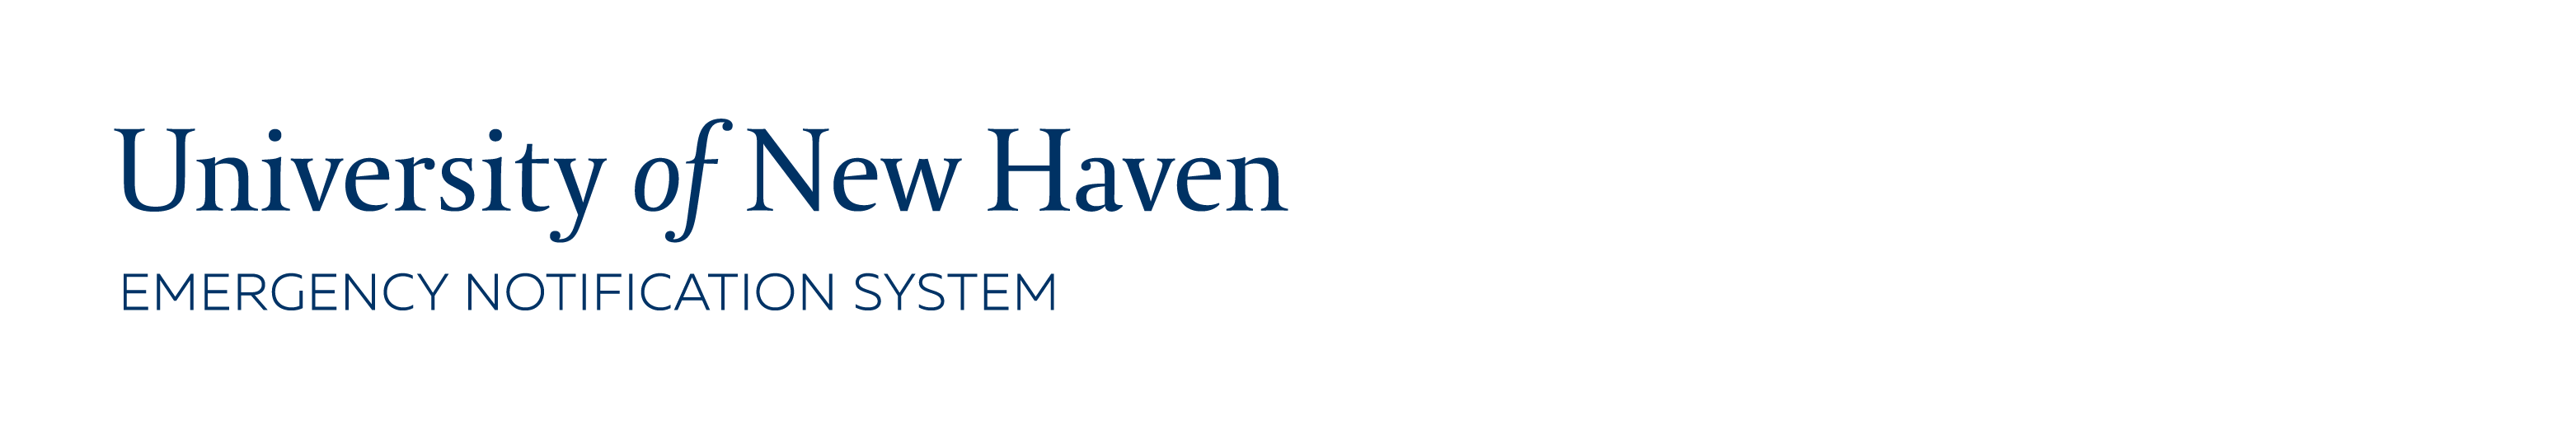 [University of New Haven Campus] Member Portal banner